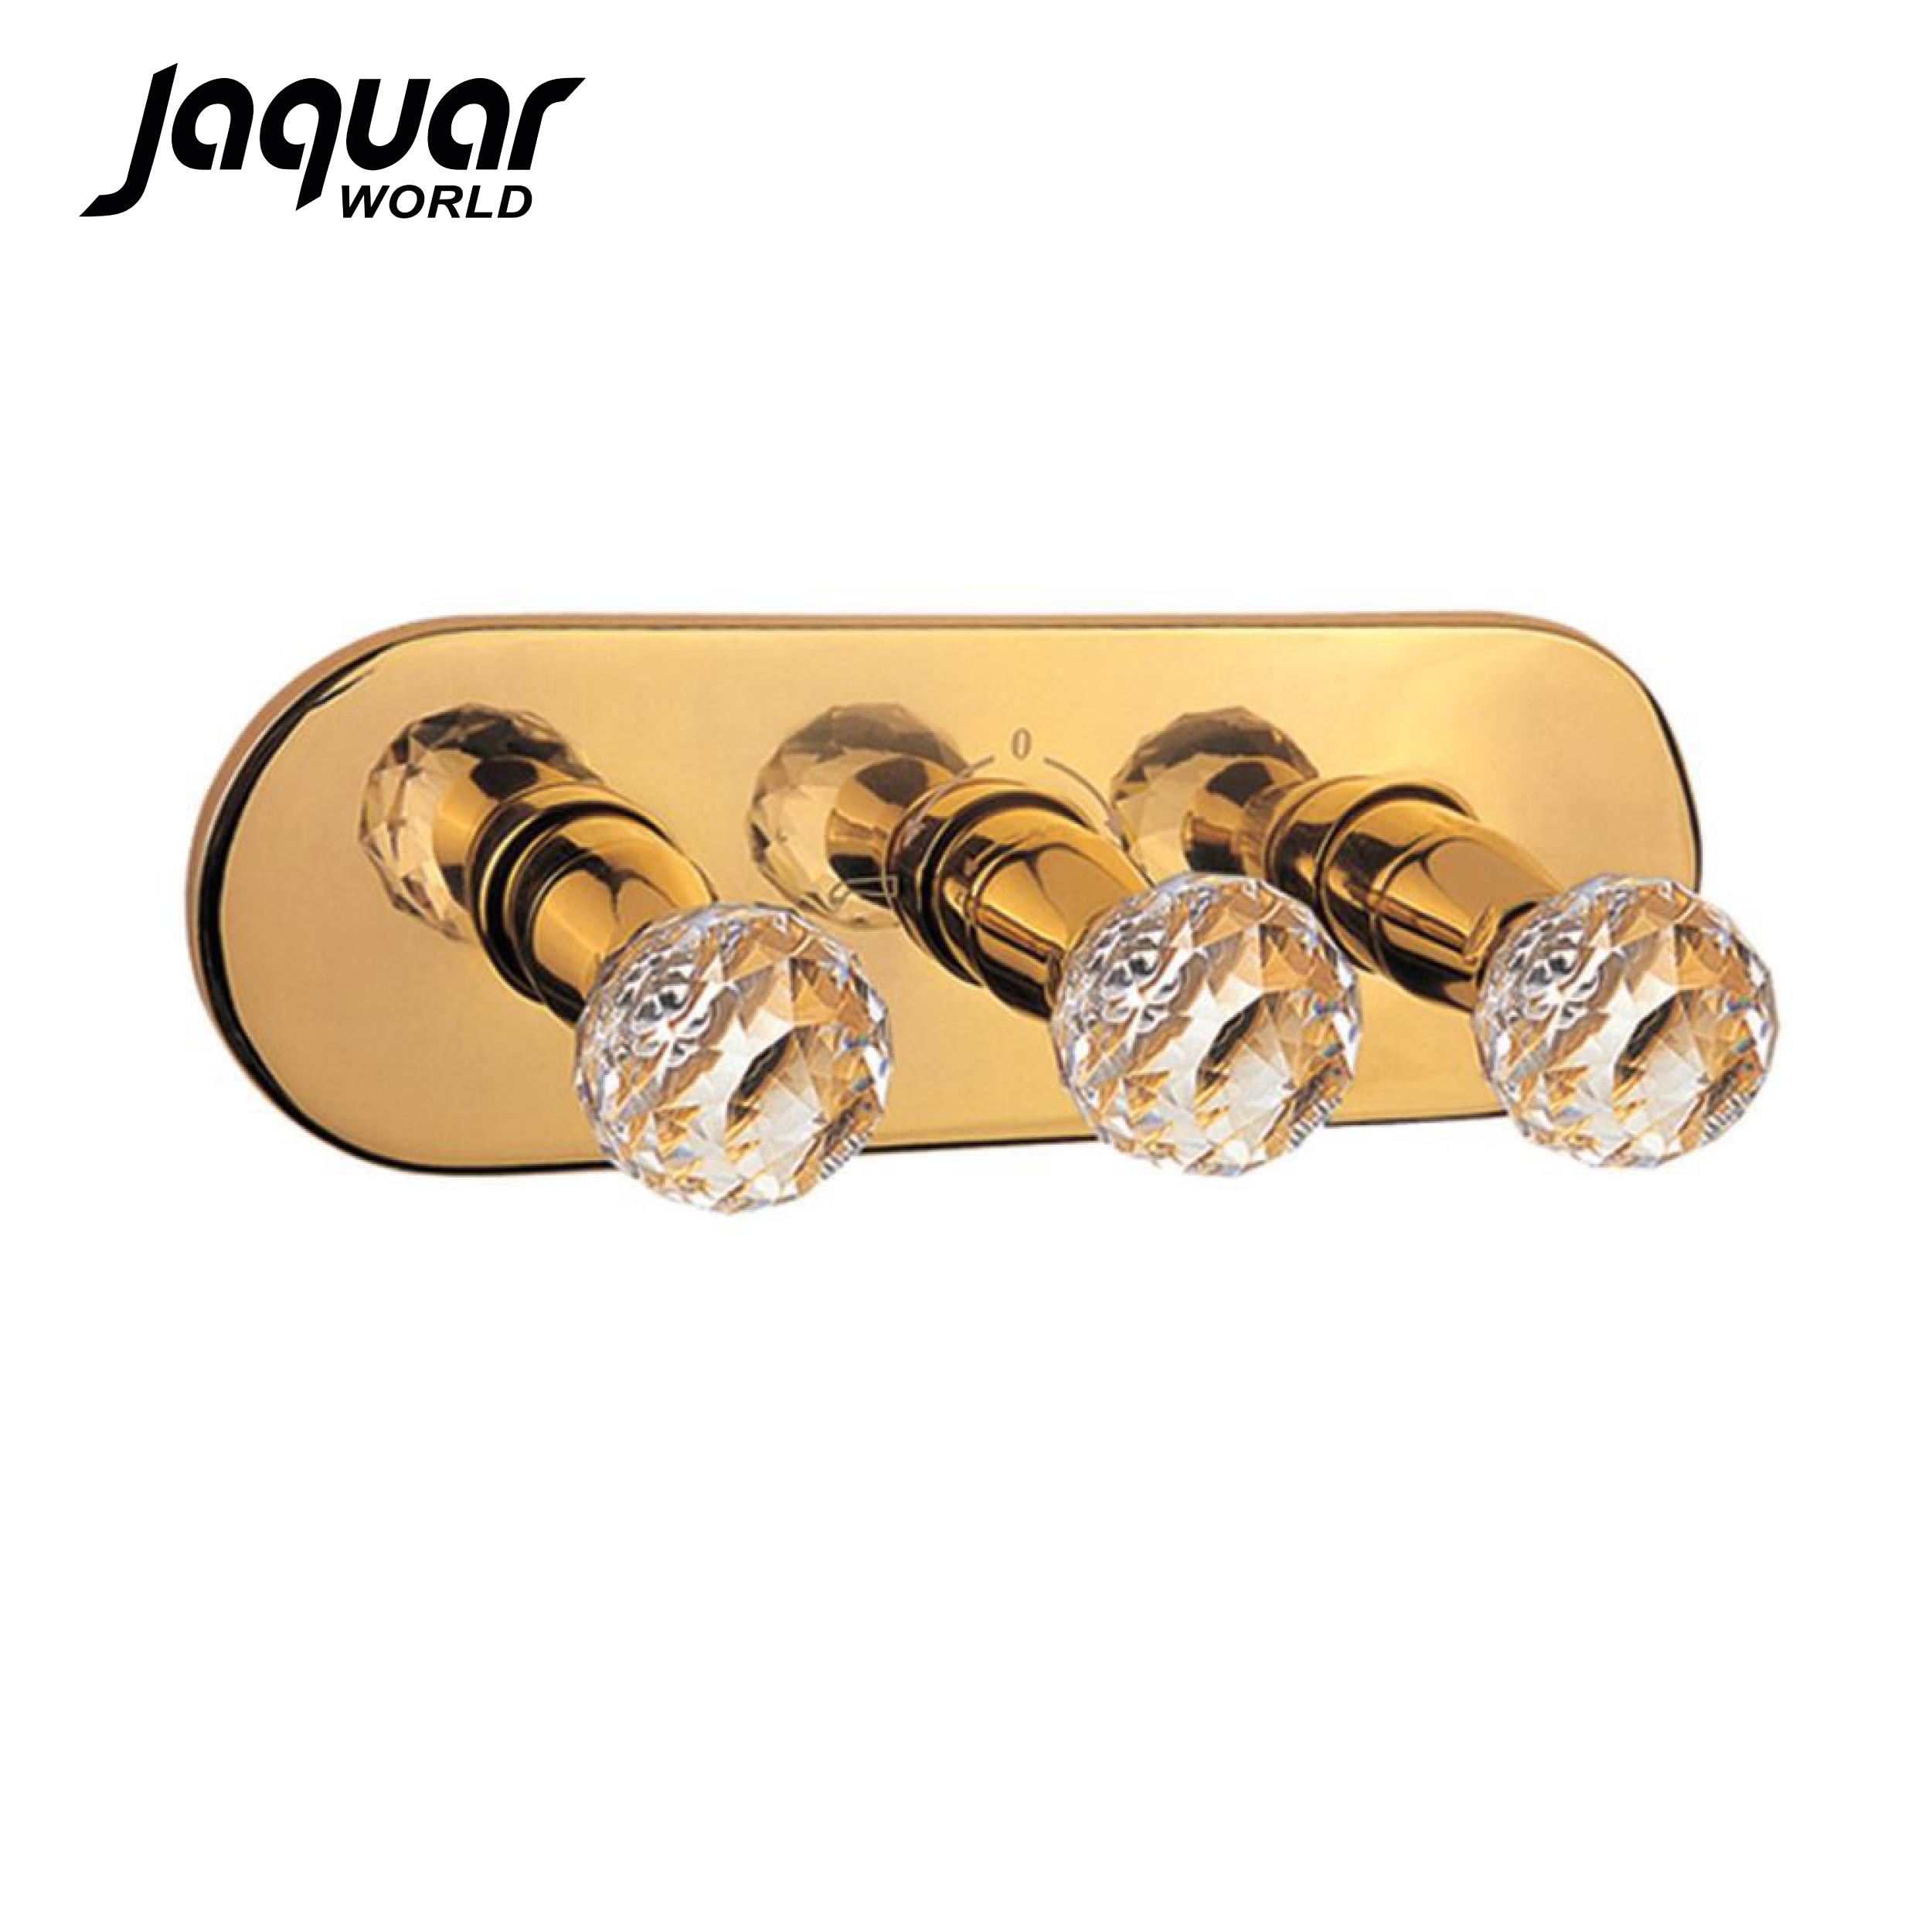 Jaquar accessories